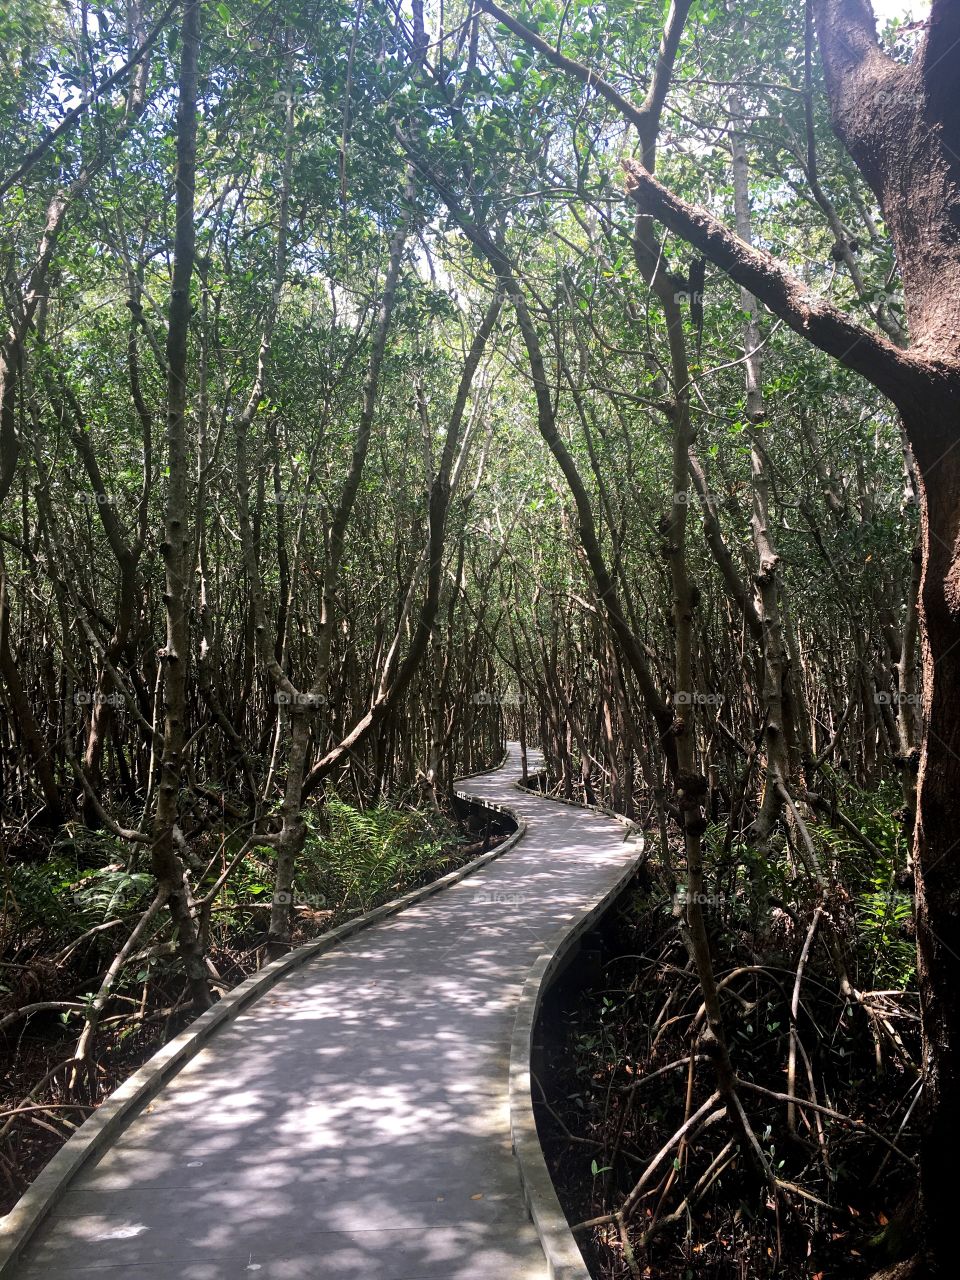 Journey through the Mangroves 